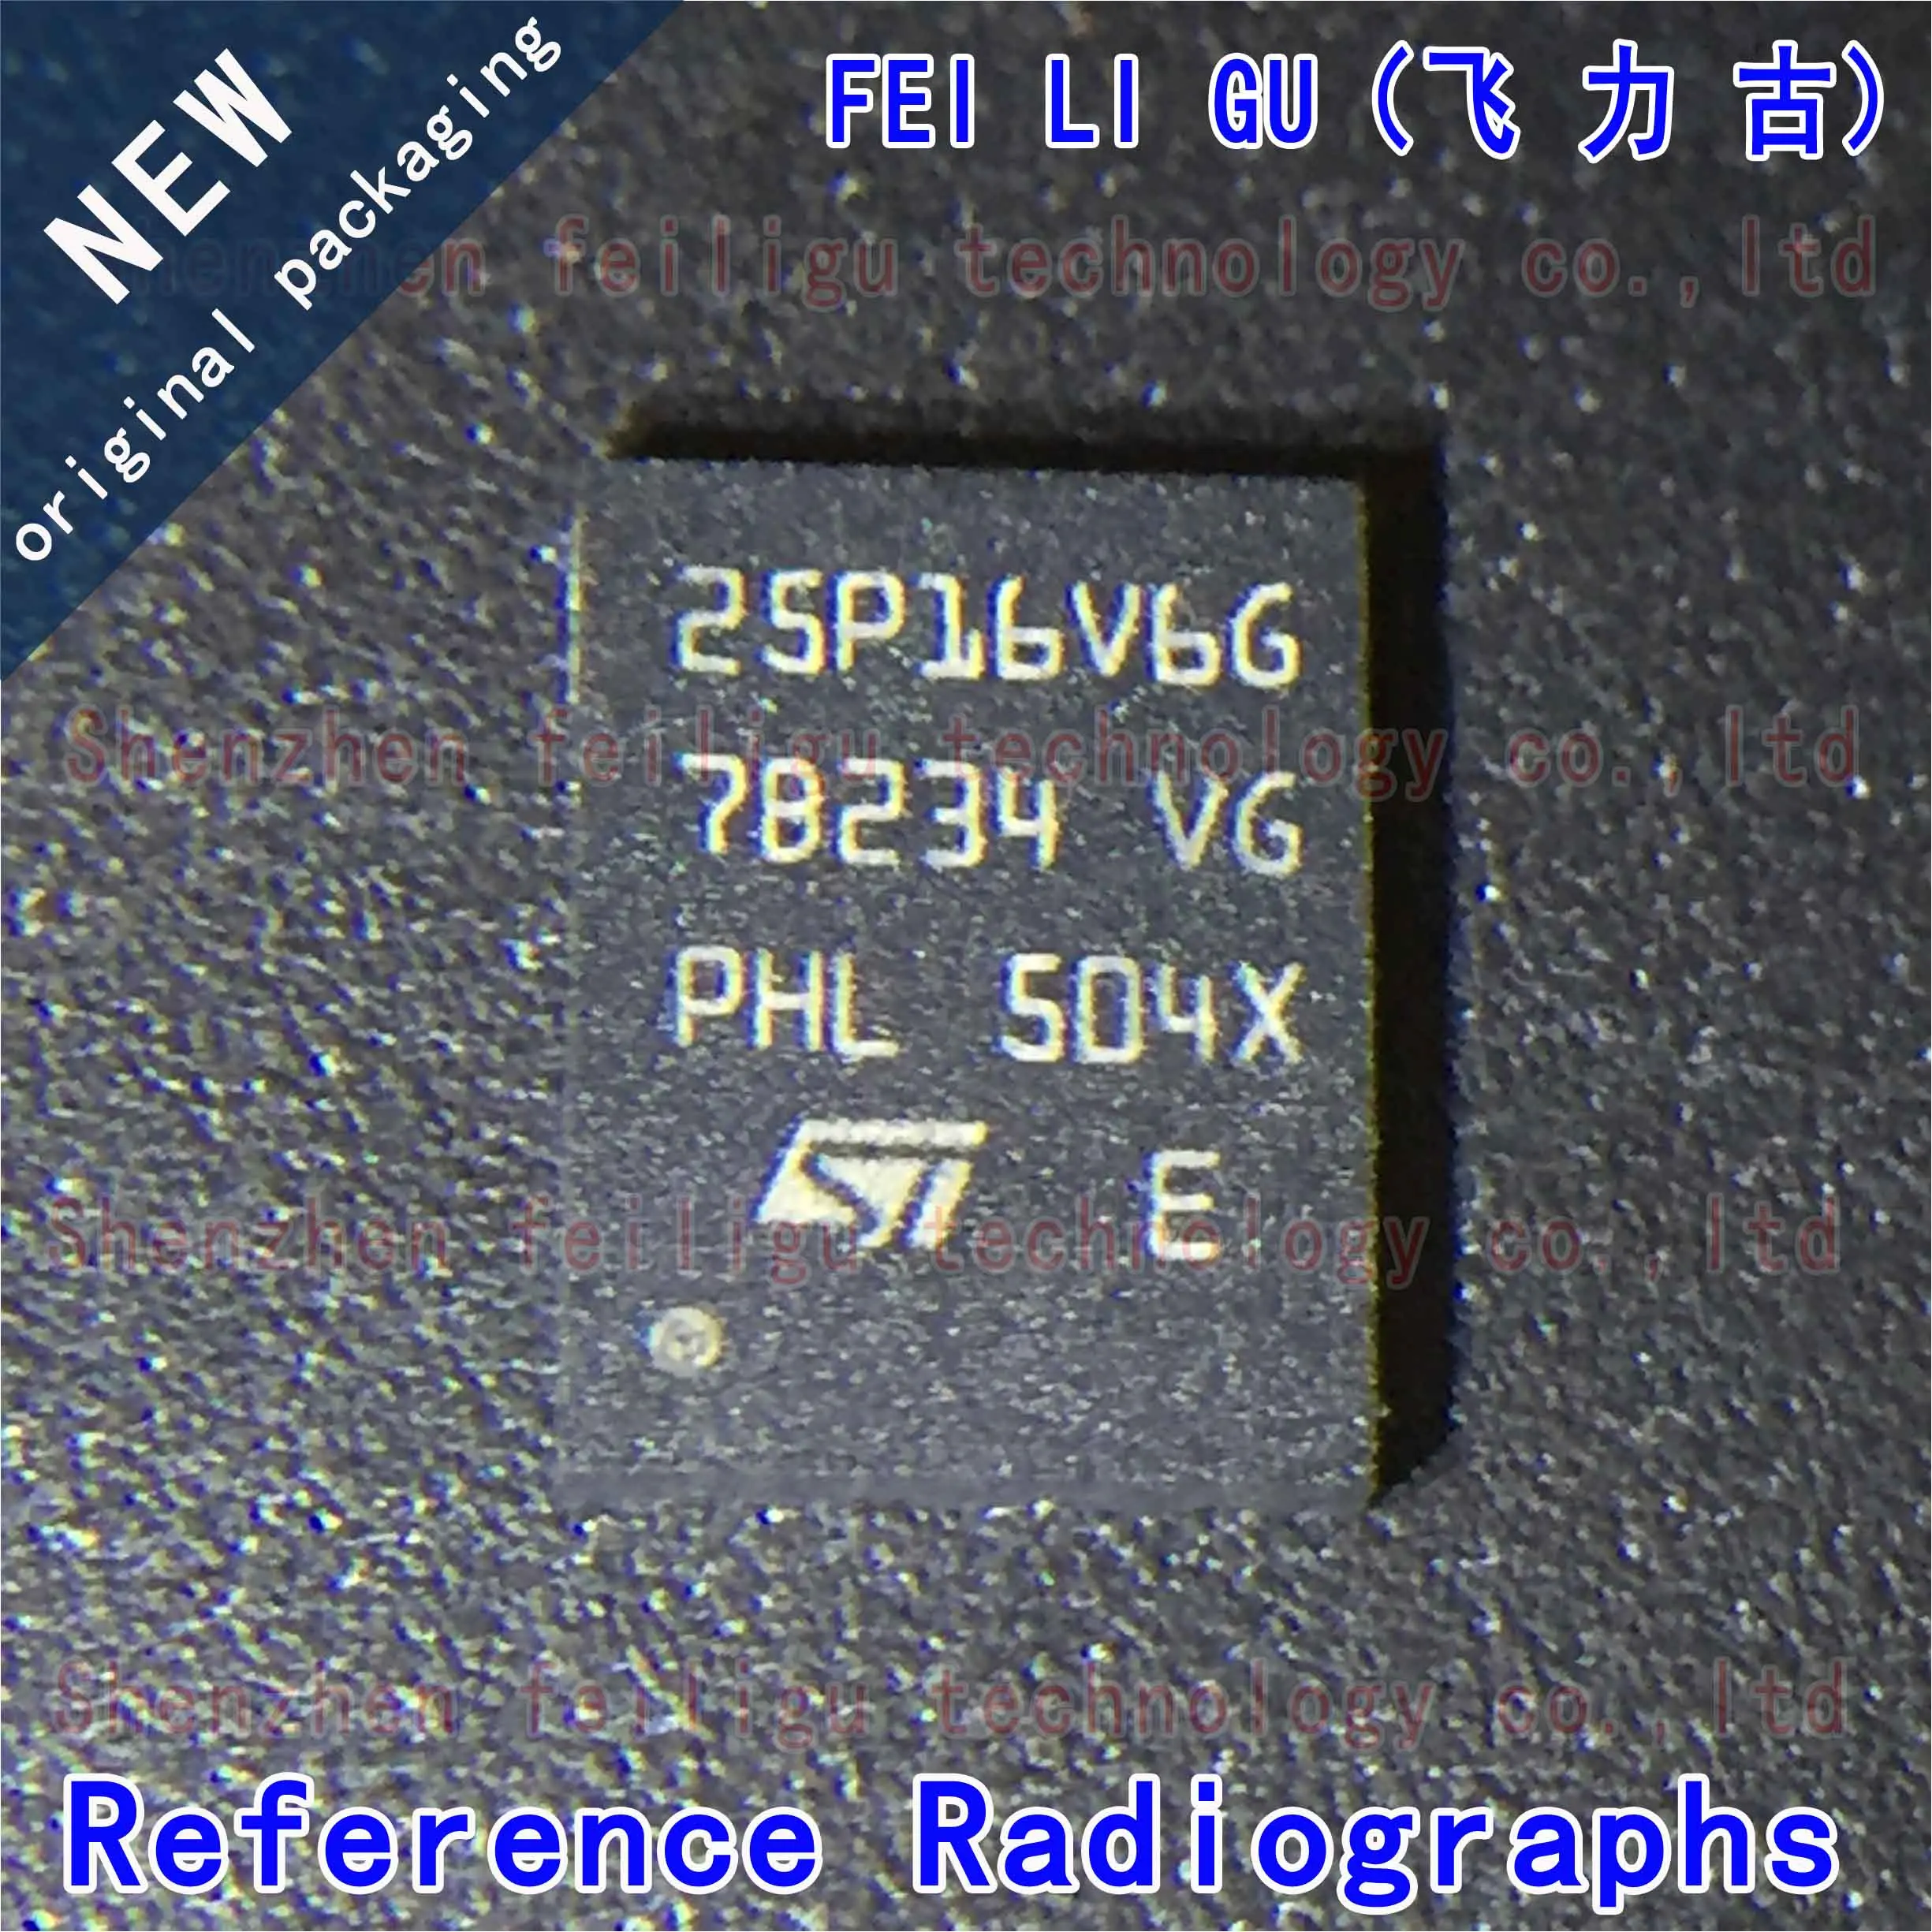 1pcs 100% new original mt40a512m16ly 062e it e silkscreen d9wfm package bga96 sdram ddr4 memory 8gb chip 1PCS 100% New original M25P16-VME6TG M25P16-VME6G Silkscreen:25P16V6G Package:VDFPN8 FLASH-NOR 16Mb Memory Chip